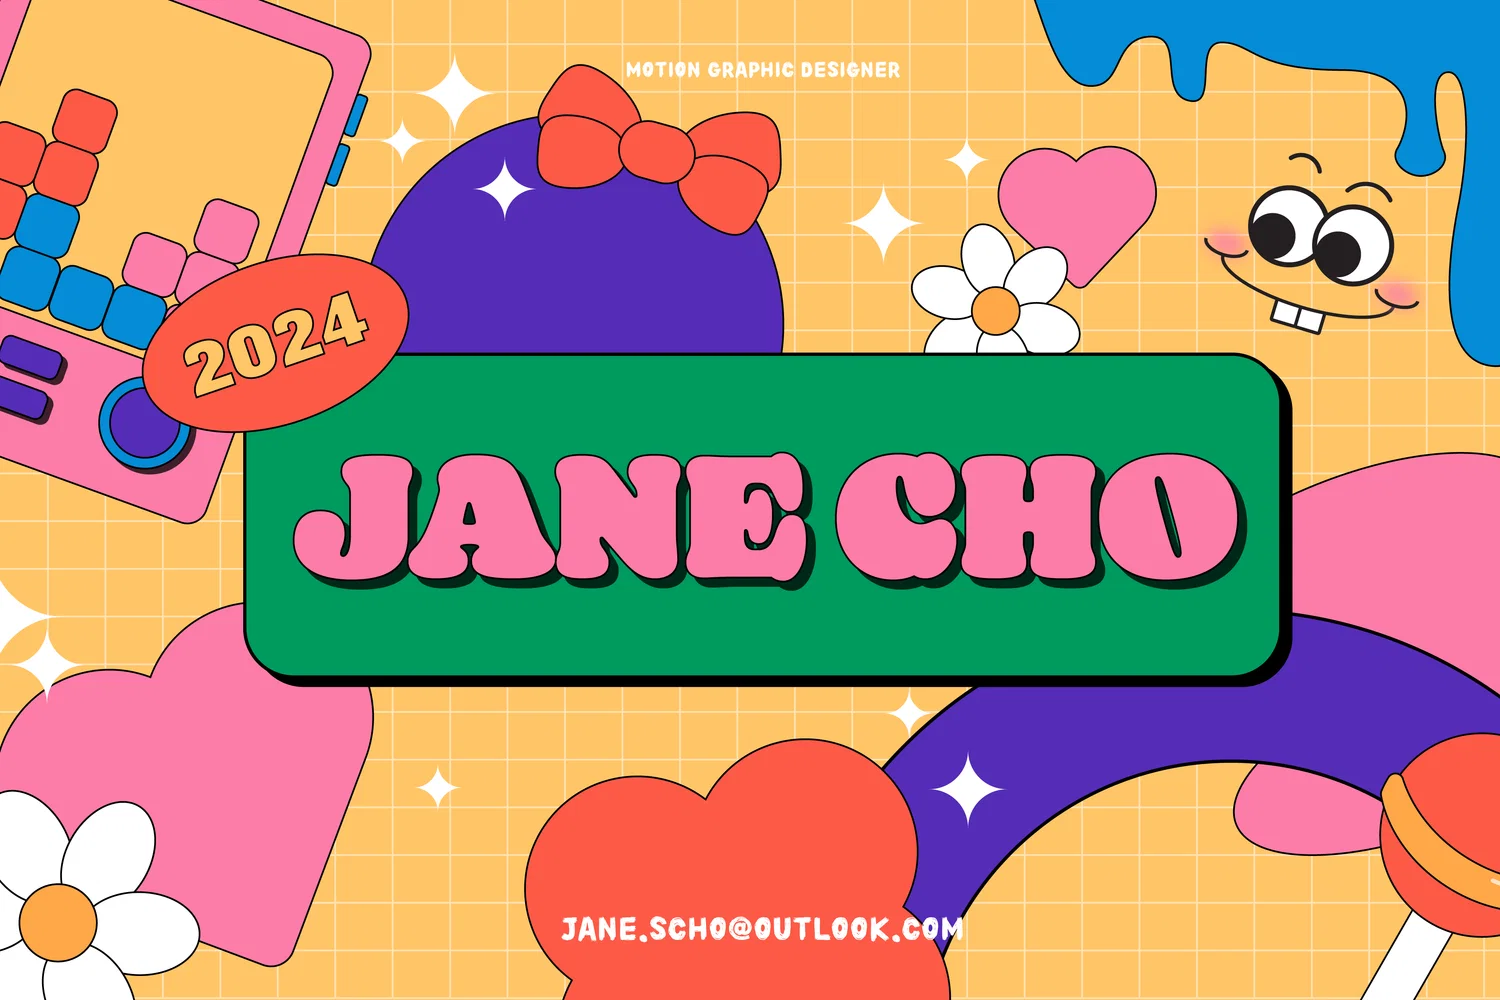 Title Design Frame for Jane Cho